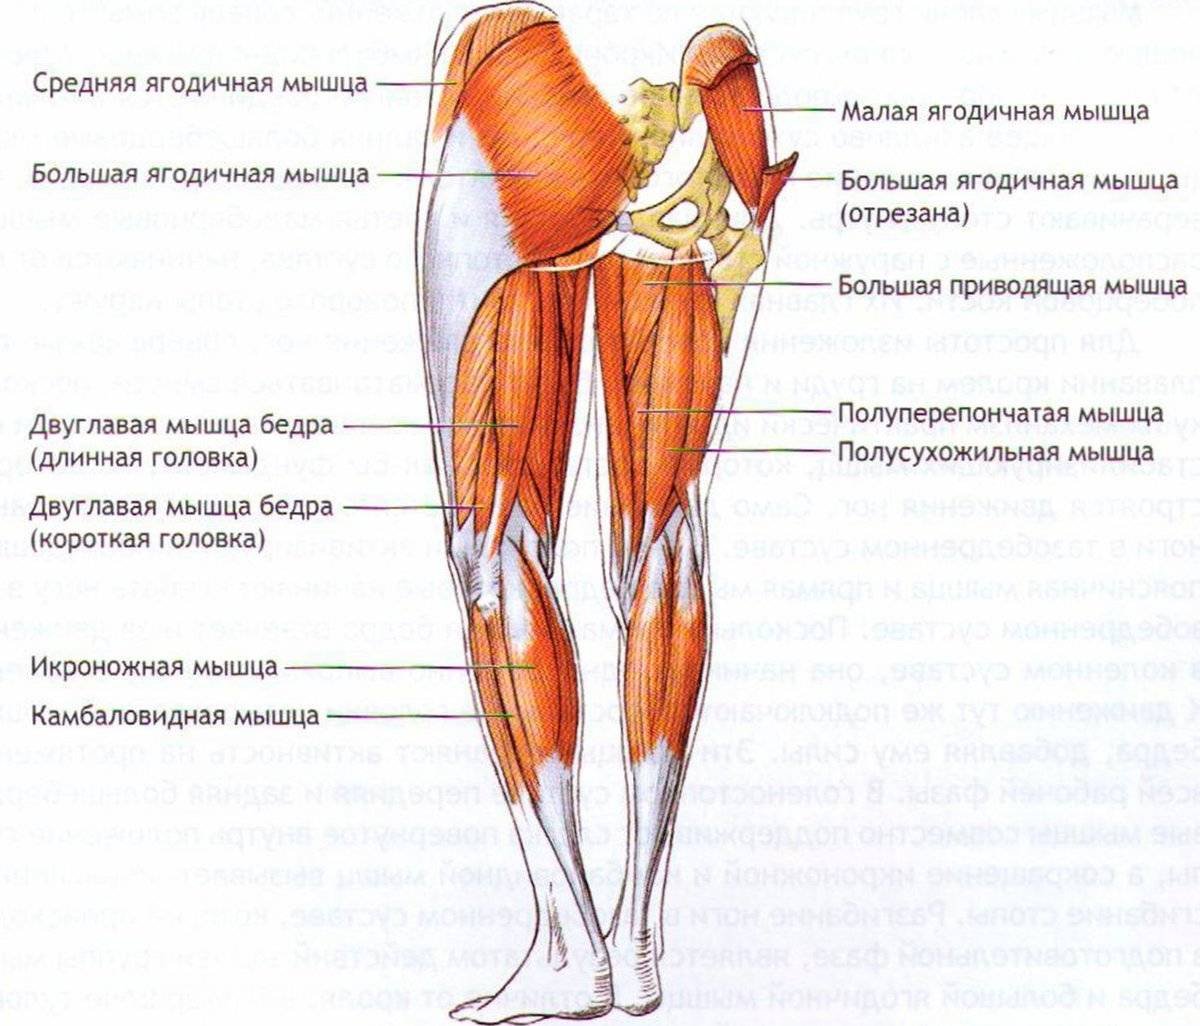 Четырехглавая мышца бедра (m. quadriceps femoris)